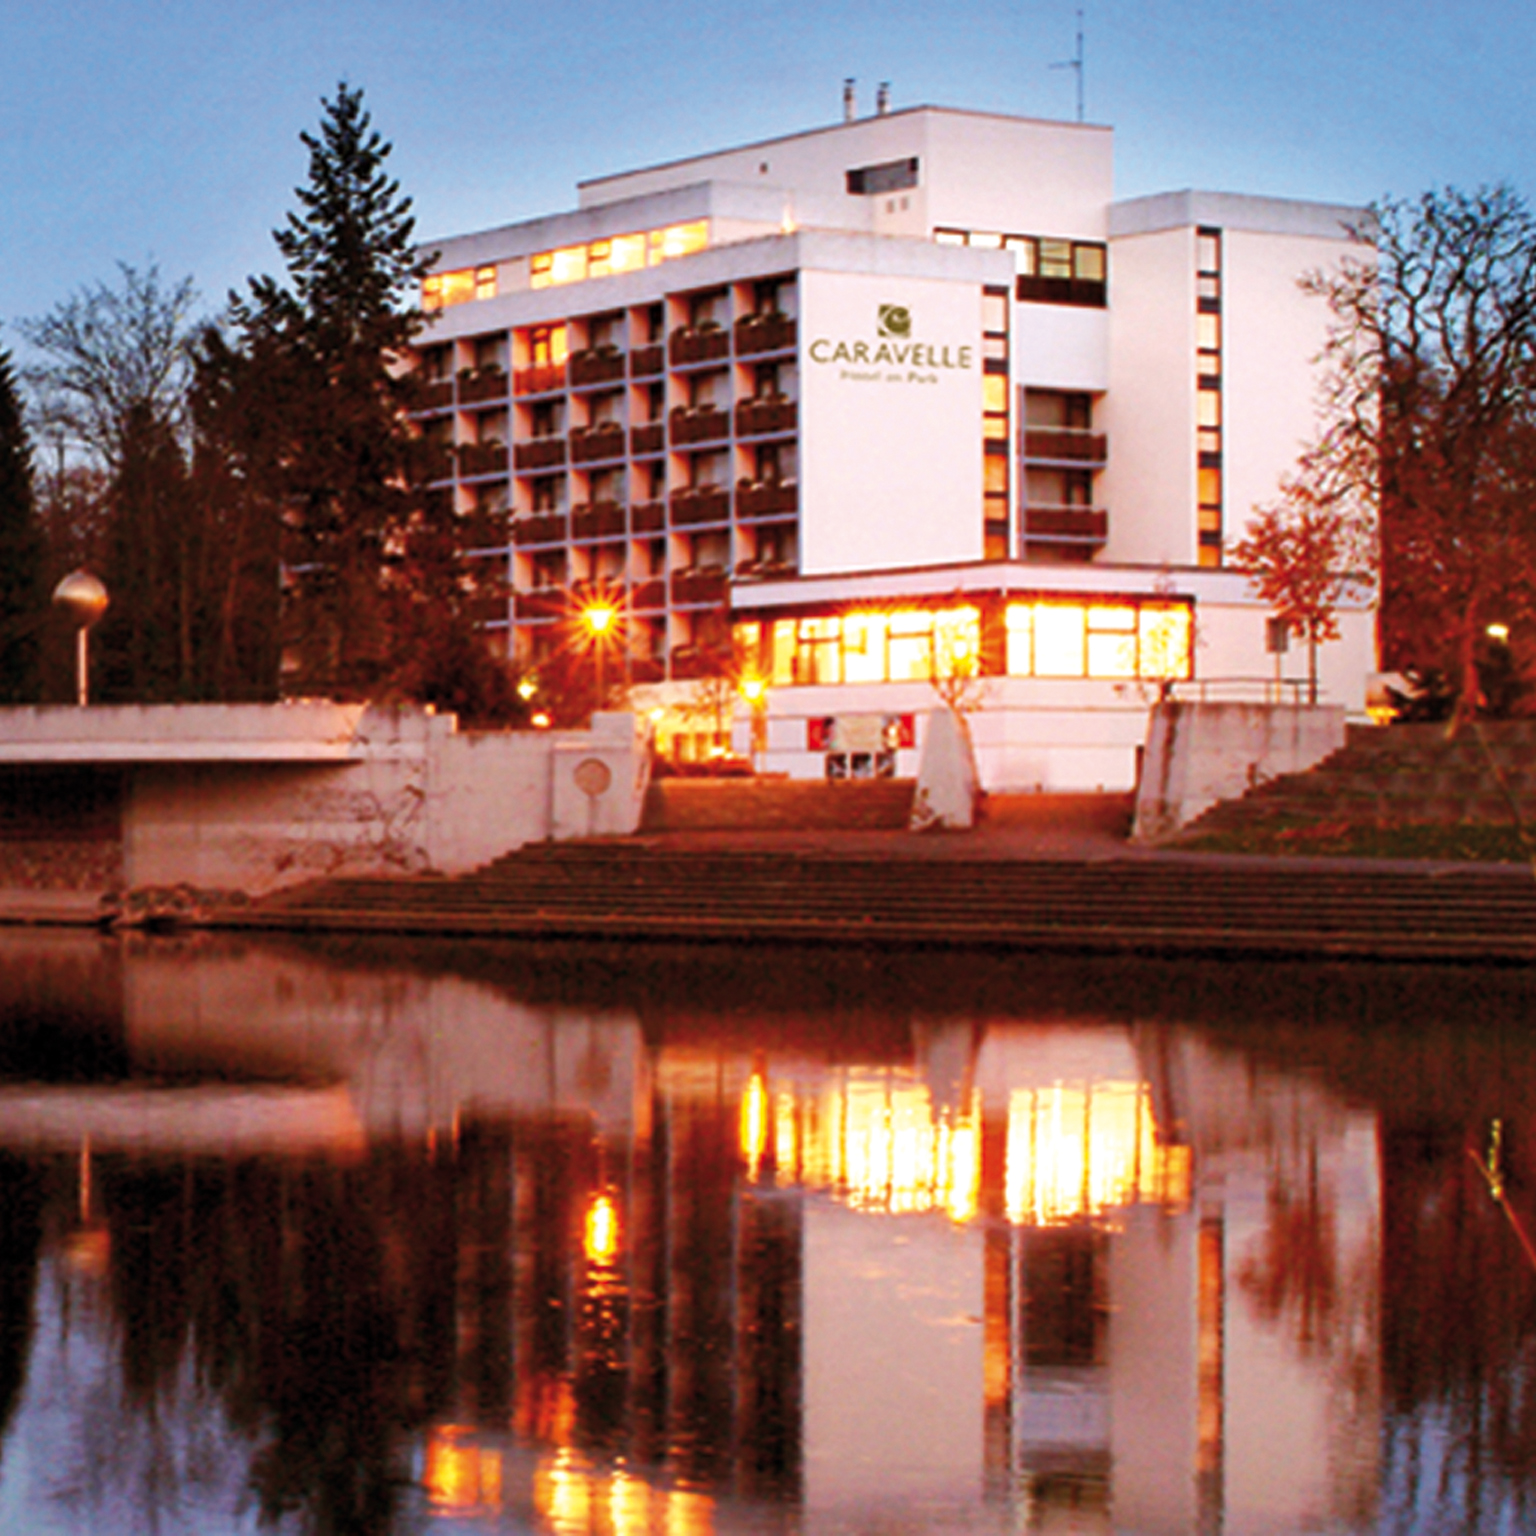 Caravelle Hotel im Park am Fluss Nahe